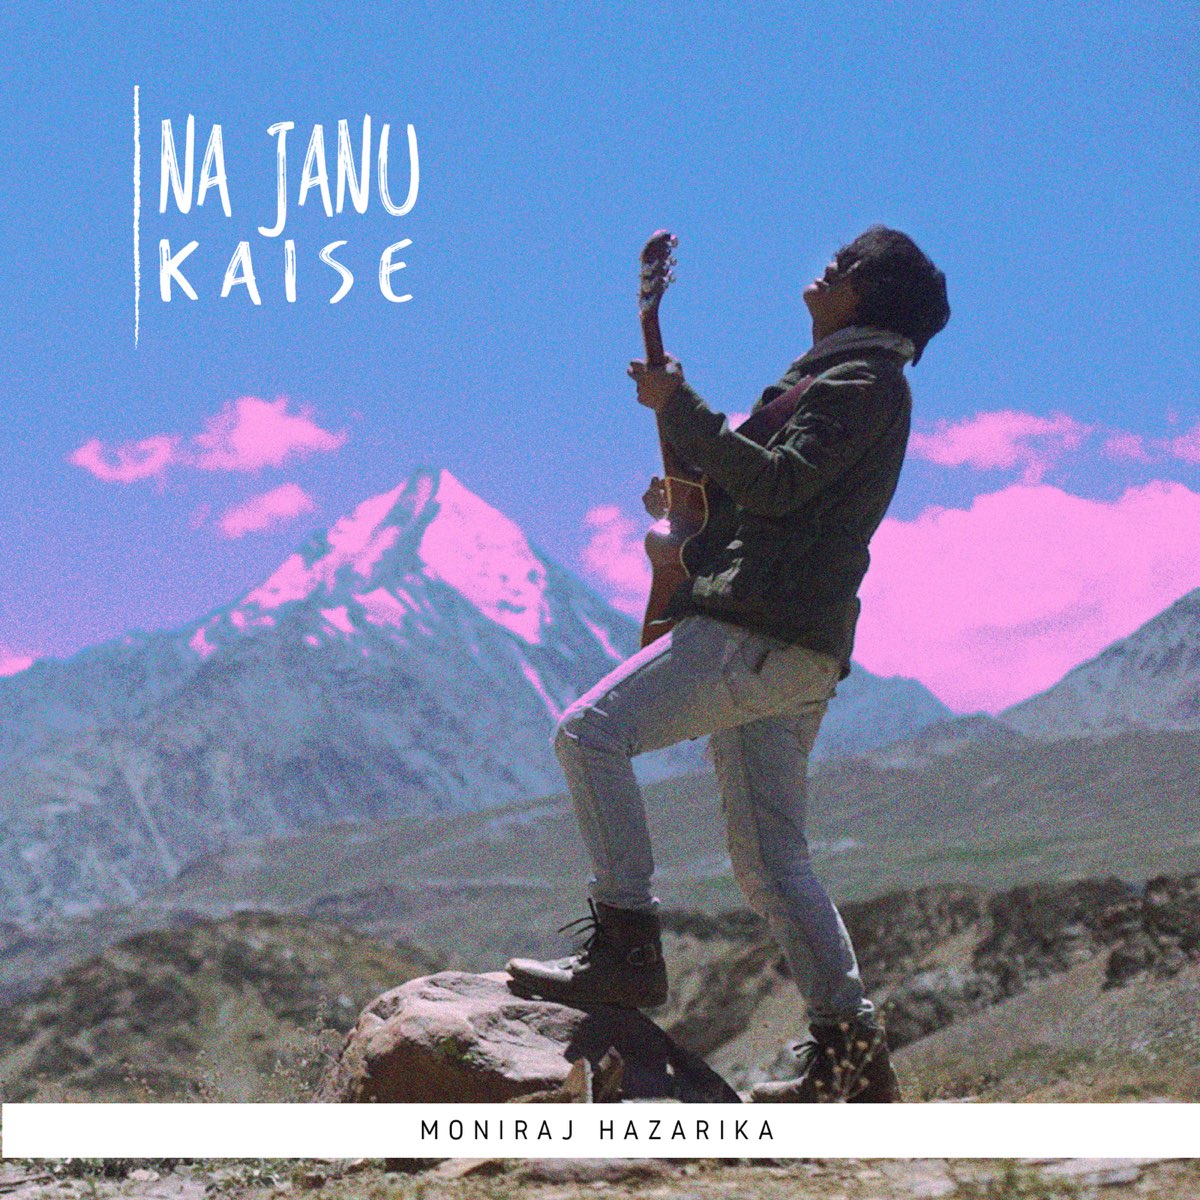 Na Janu Kaise - Single by Moniraj Hazarika on Apple Music